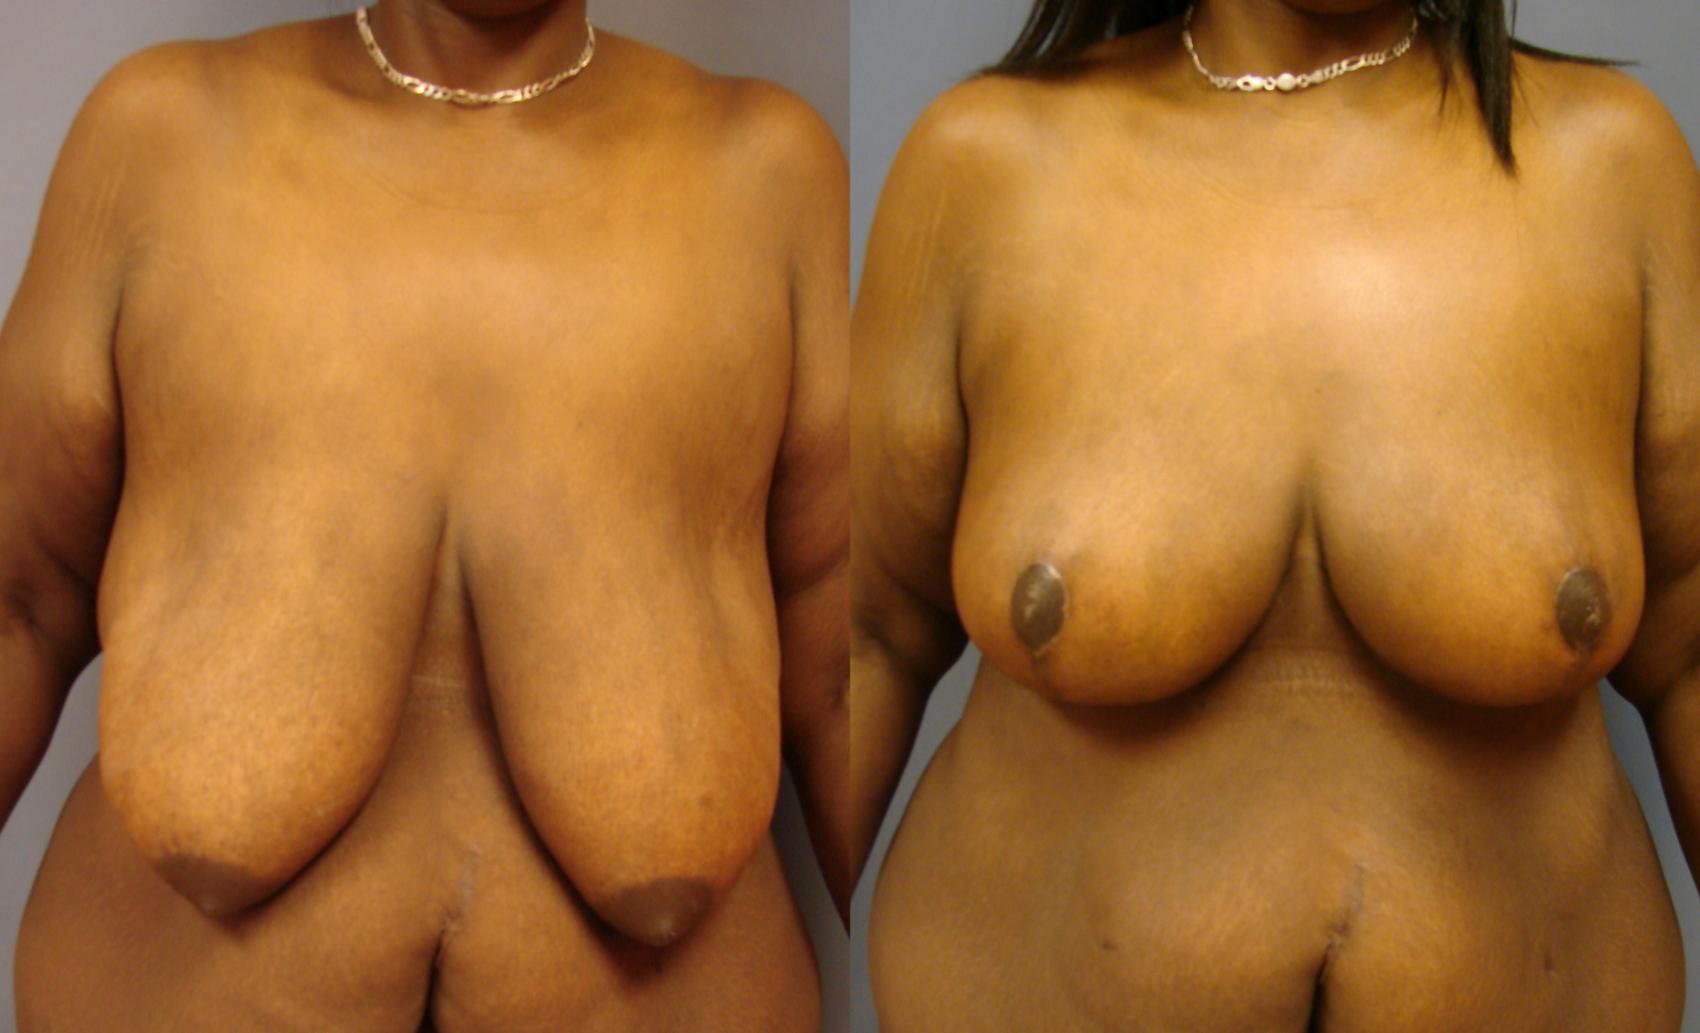 Rayna greenberg breast reduction